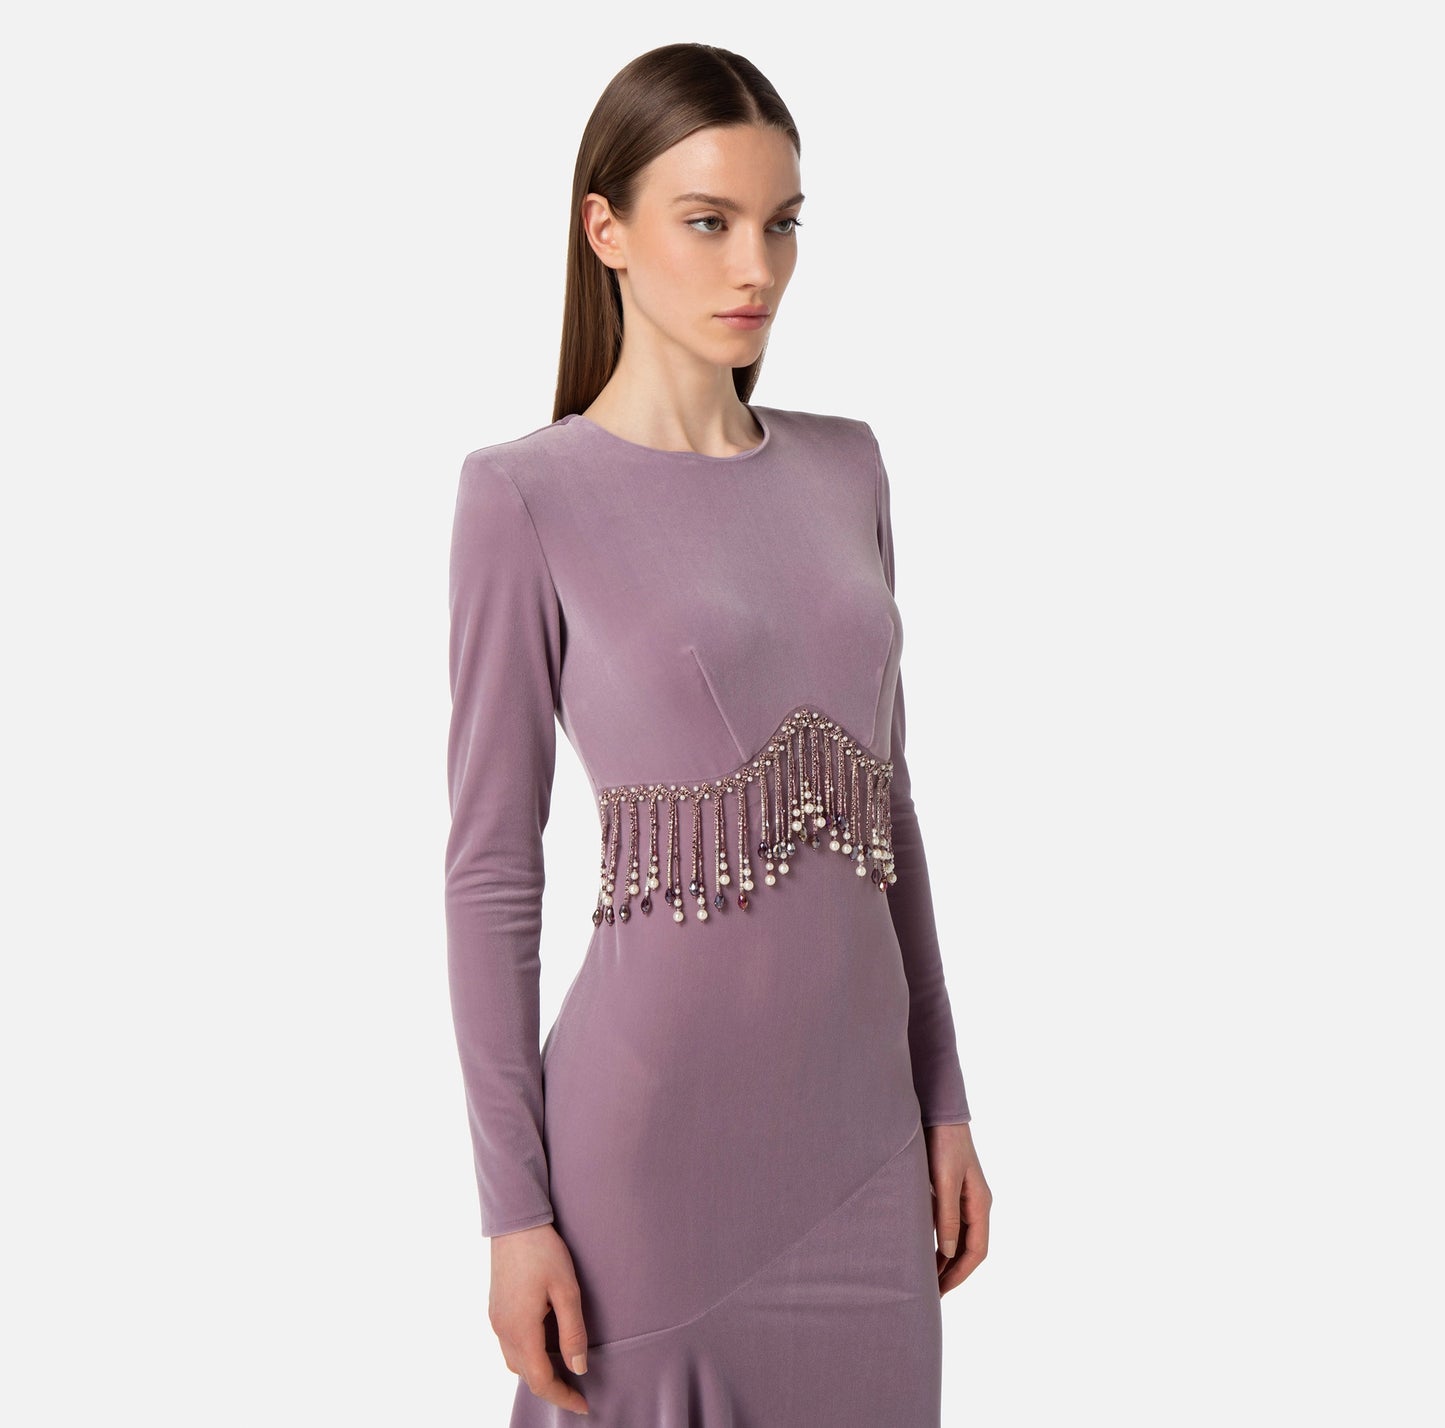 Velvet midi dress with beads